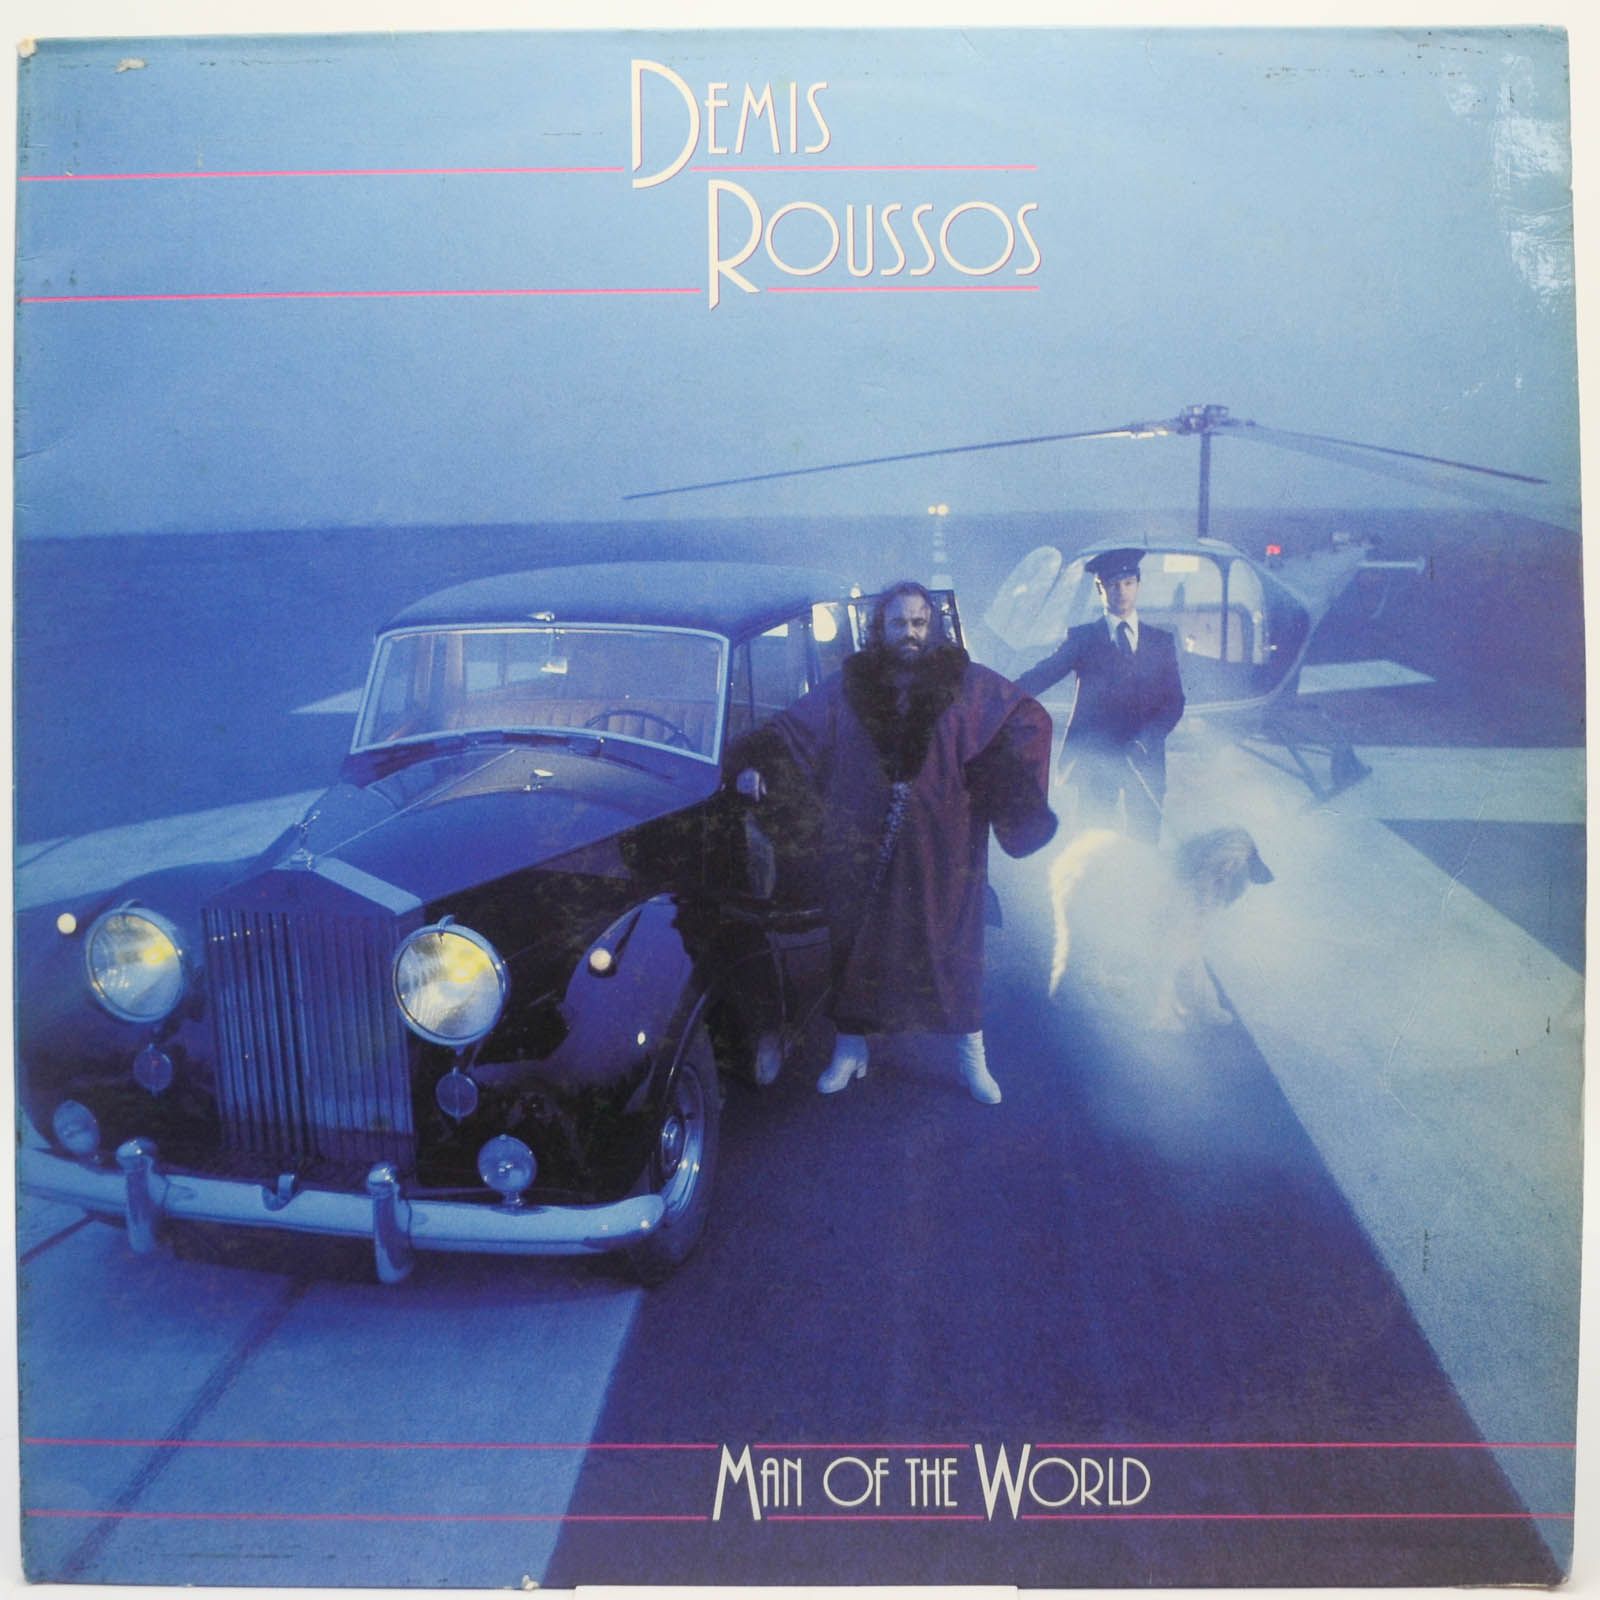 Demis Roussos — Man Of The World, 1980